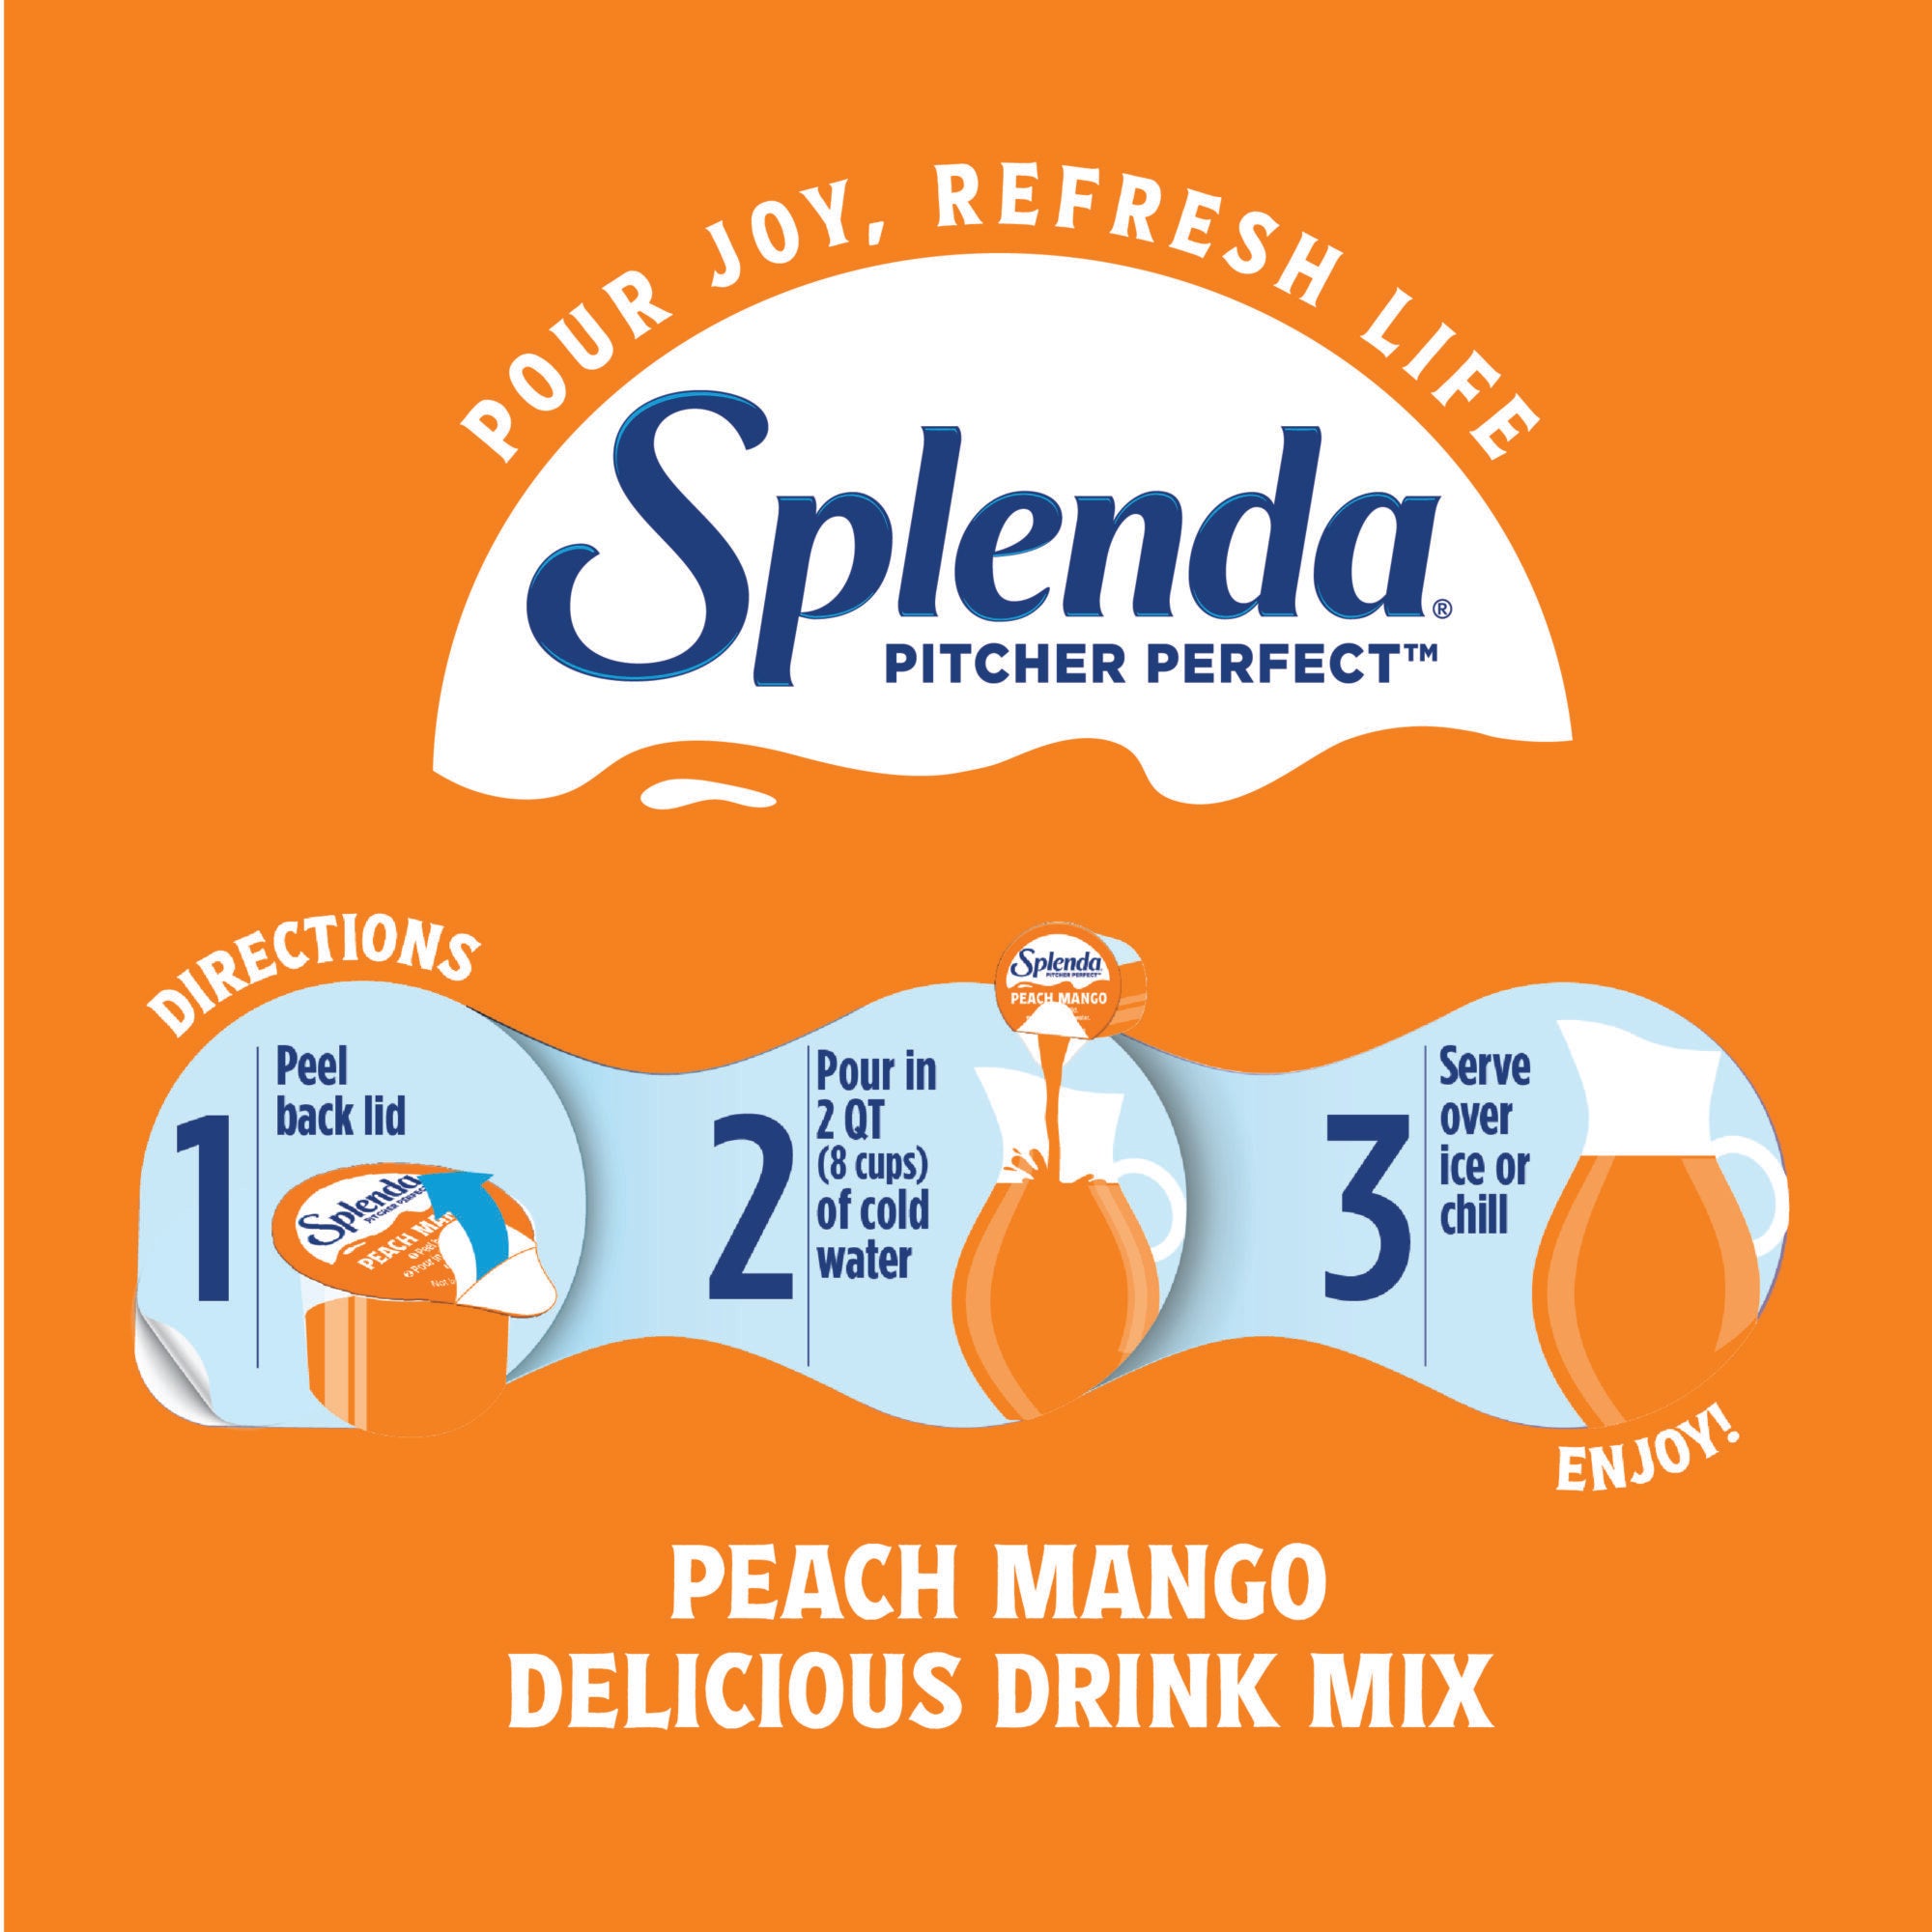 Splenda Pitcher Perfect Peach Mango Zero Sugar Drink Mix – Instructions